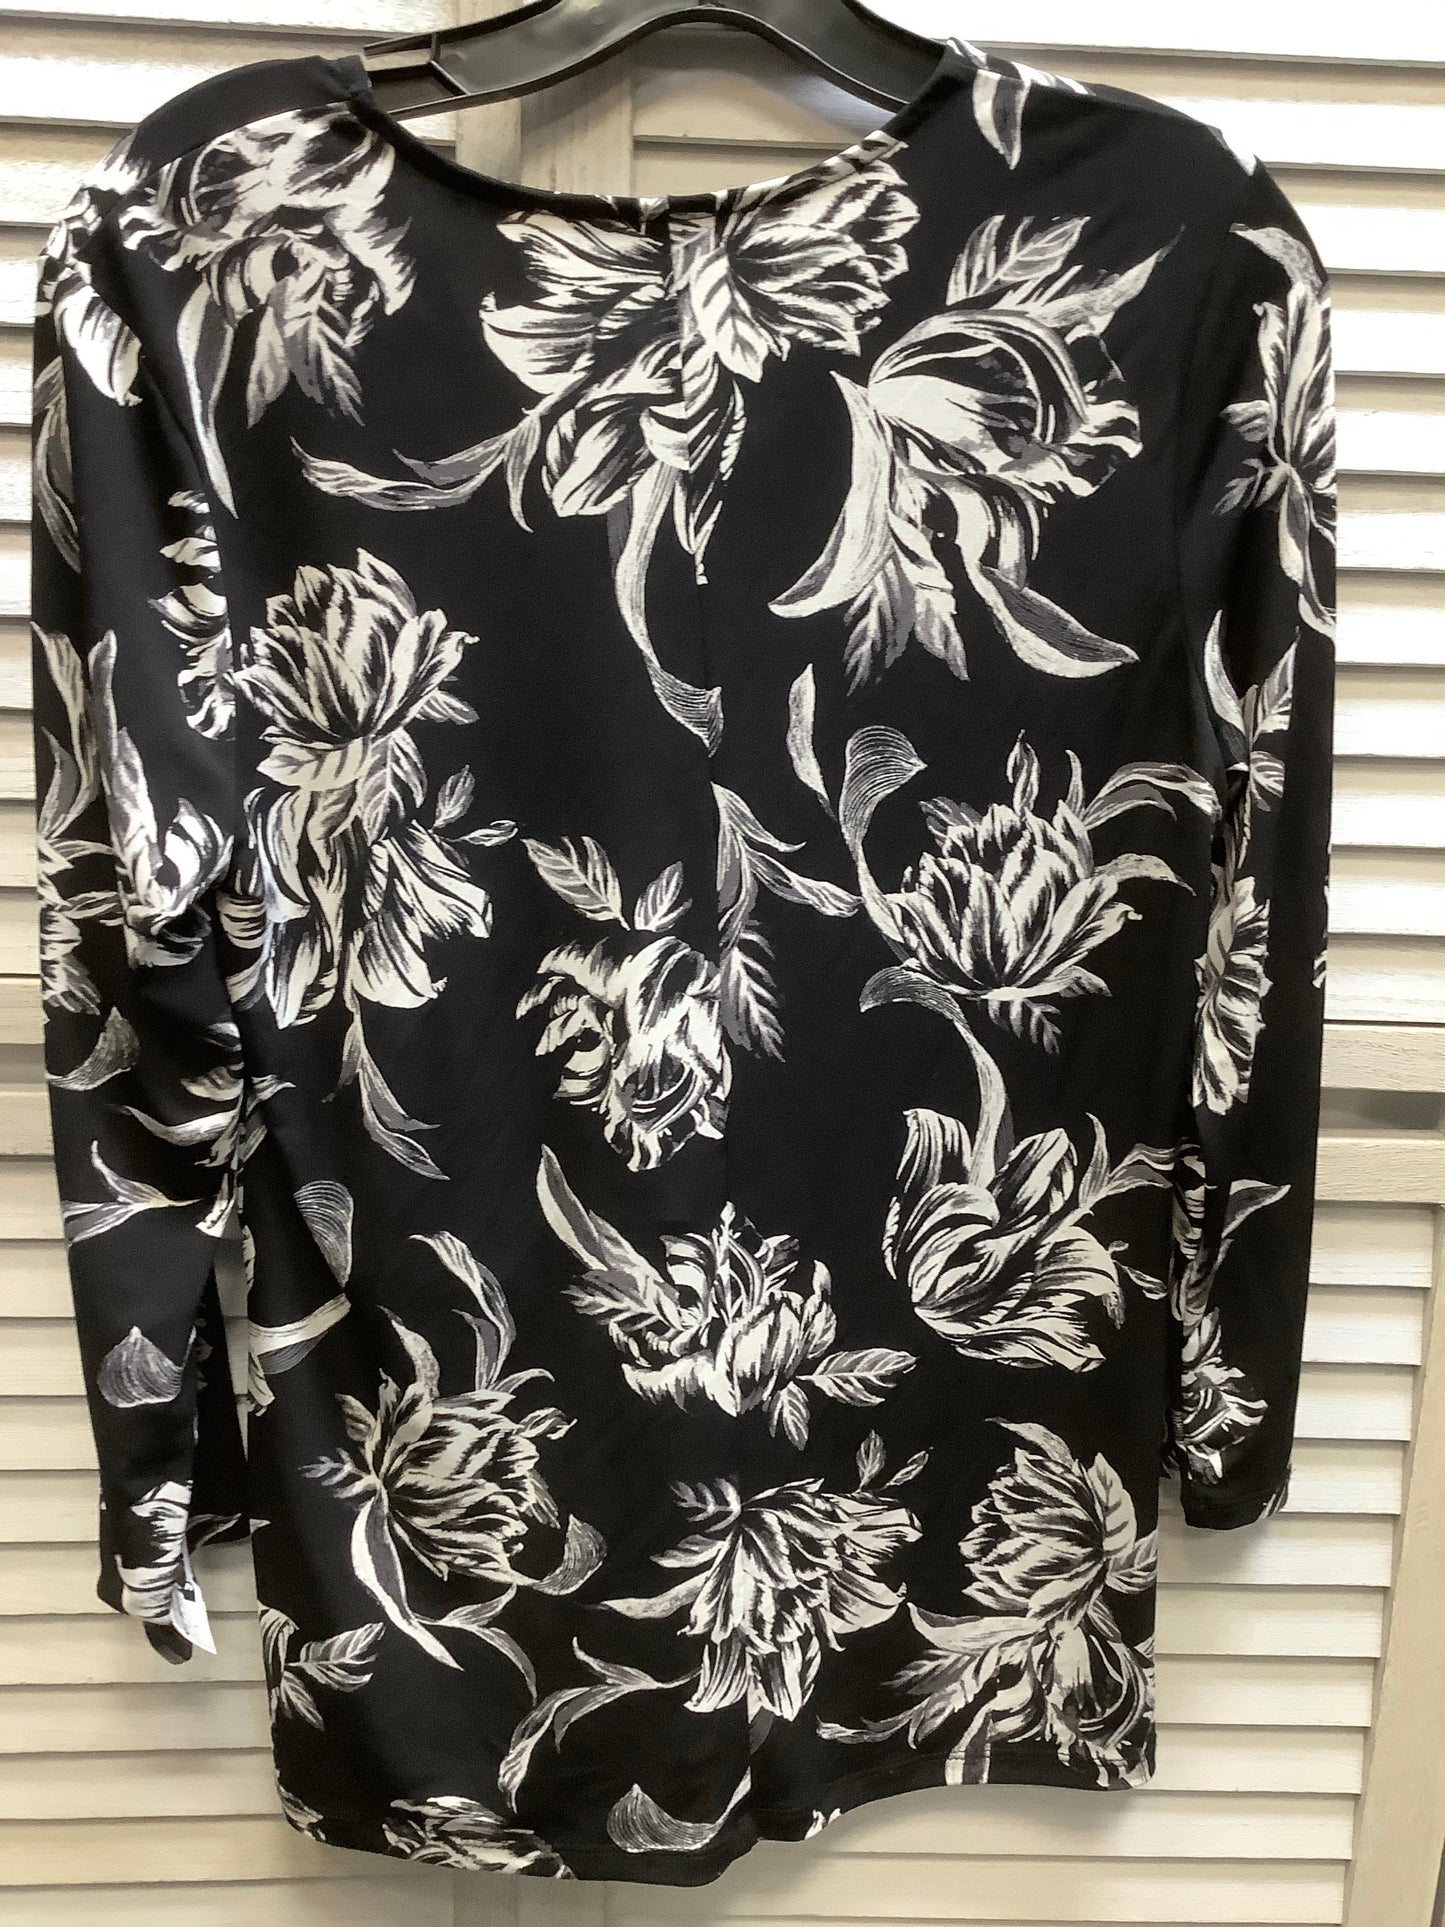 Black Floral Top Long Sleeve Basic Inc, Size S